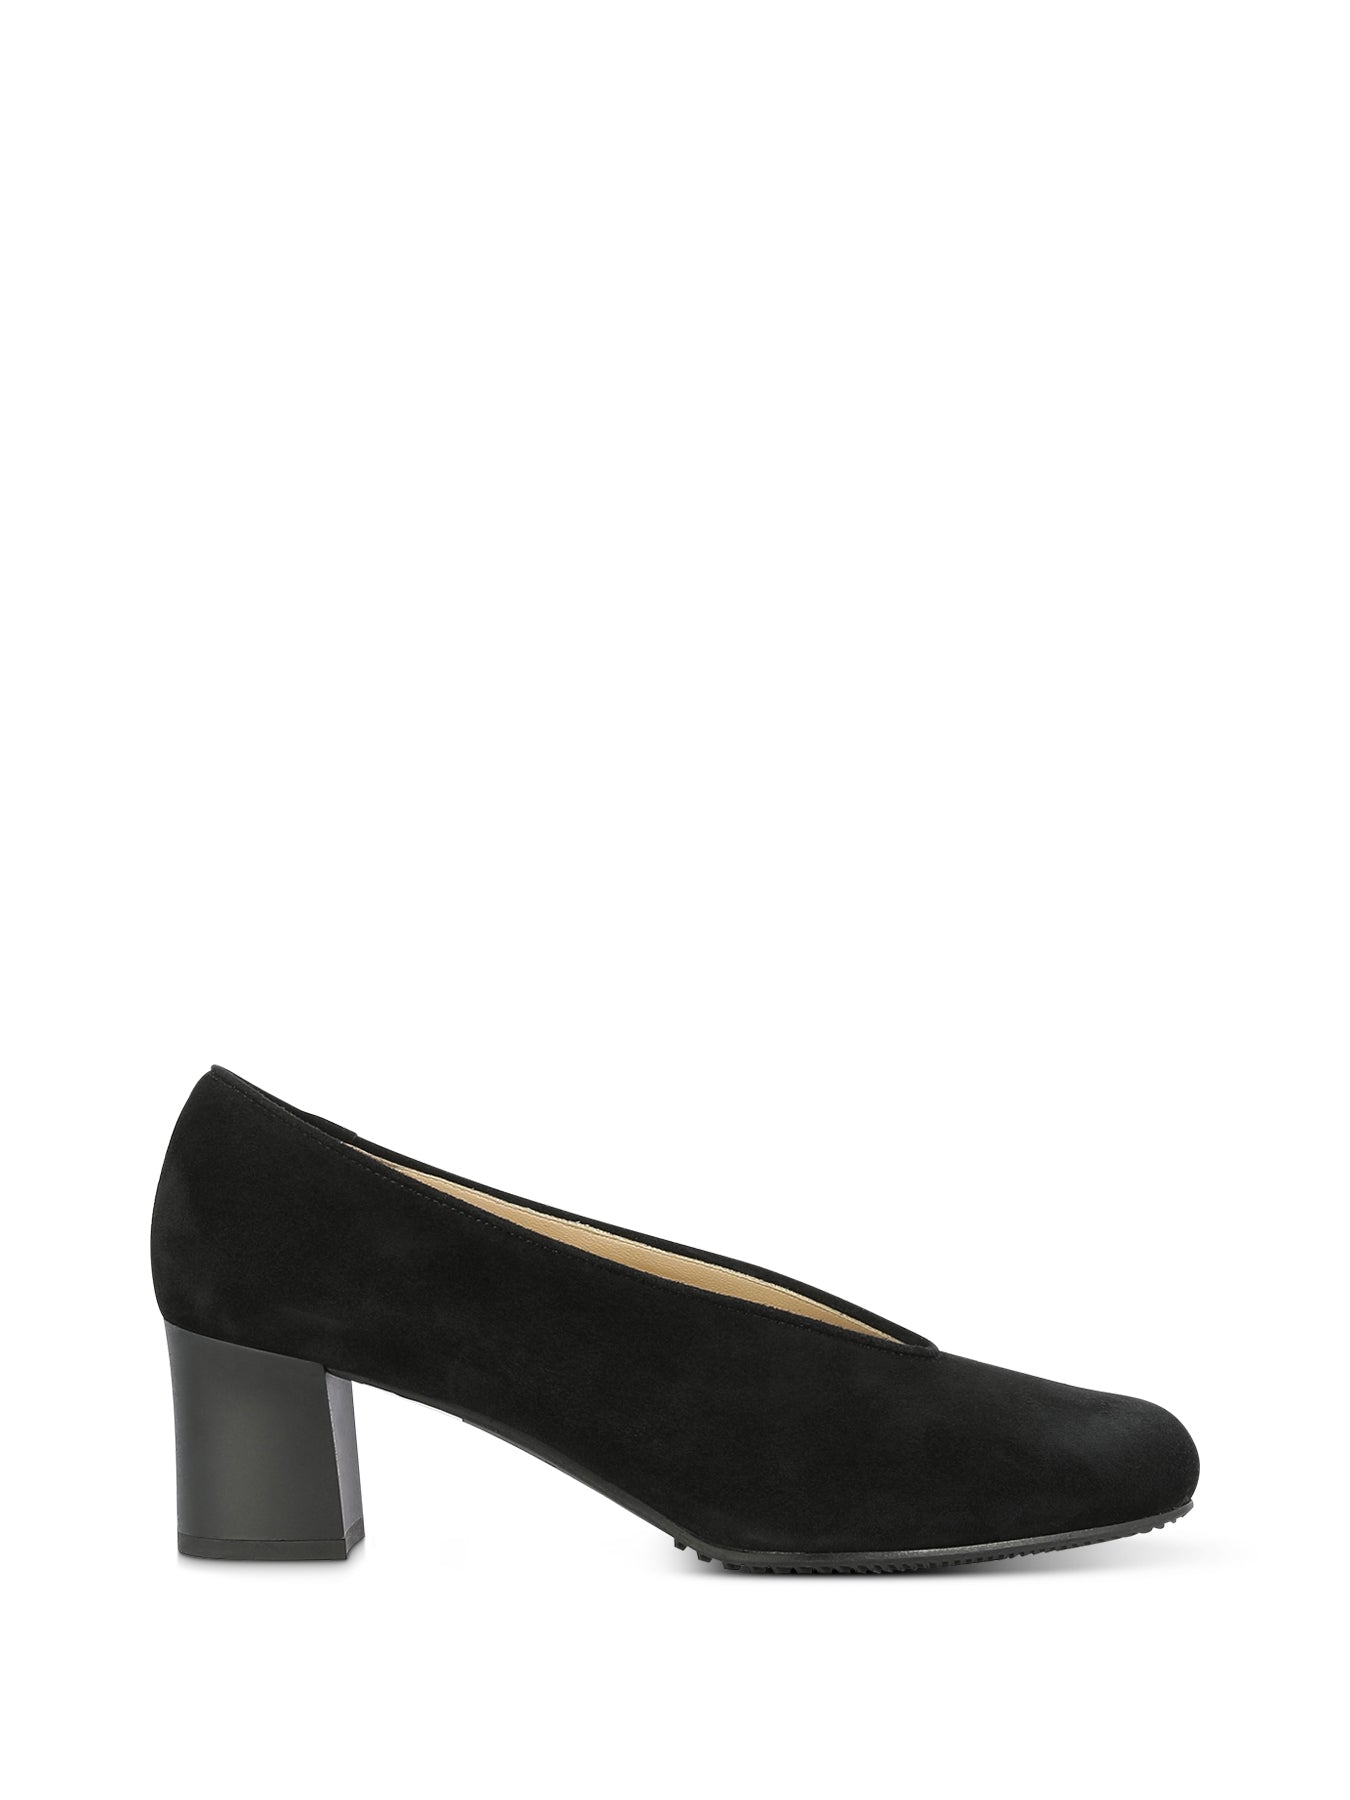 Bow Women's Princess Shoes Block Heels Platform Square Toe Mary Jane  Fashion OL | eBay